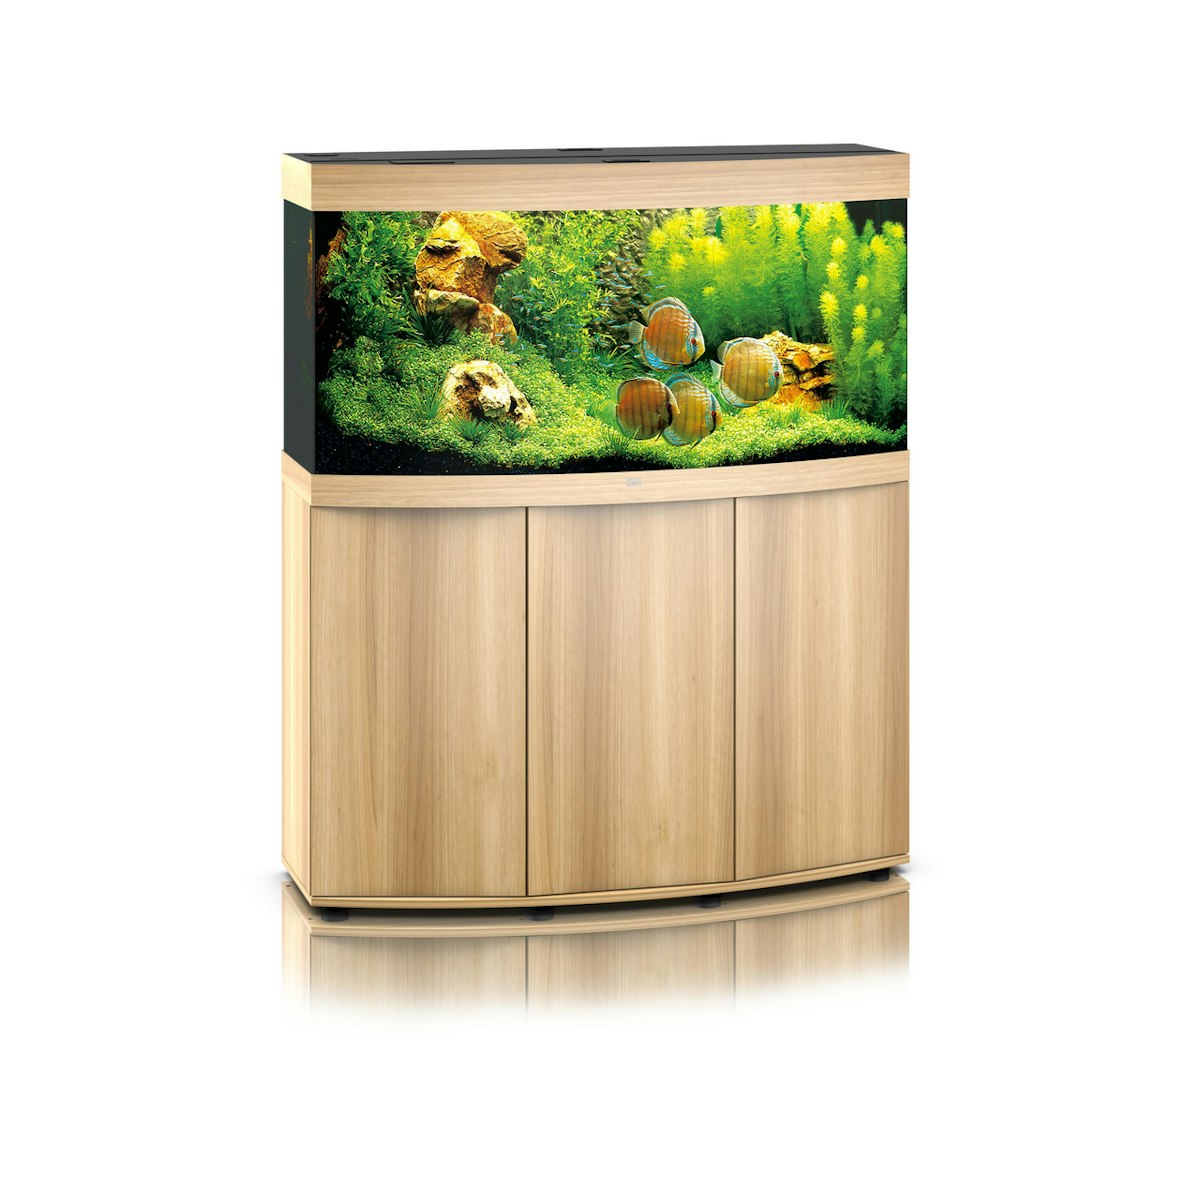 JUWEL Vision 260 LED Aquarium mit Unterschrank helles Holz